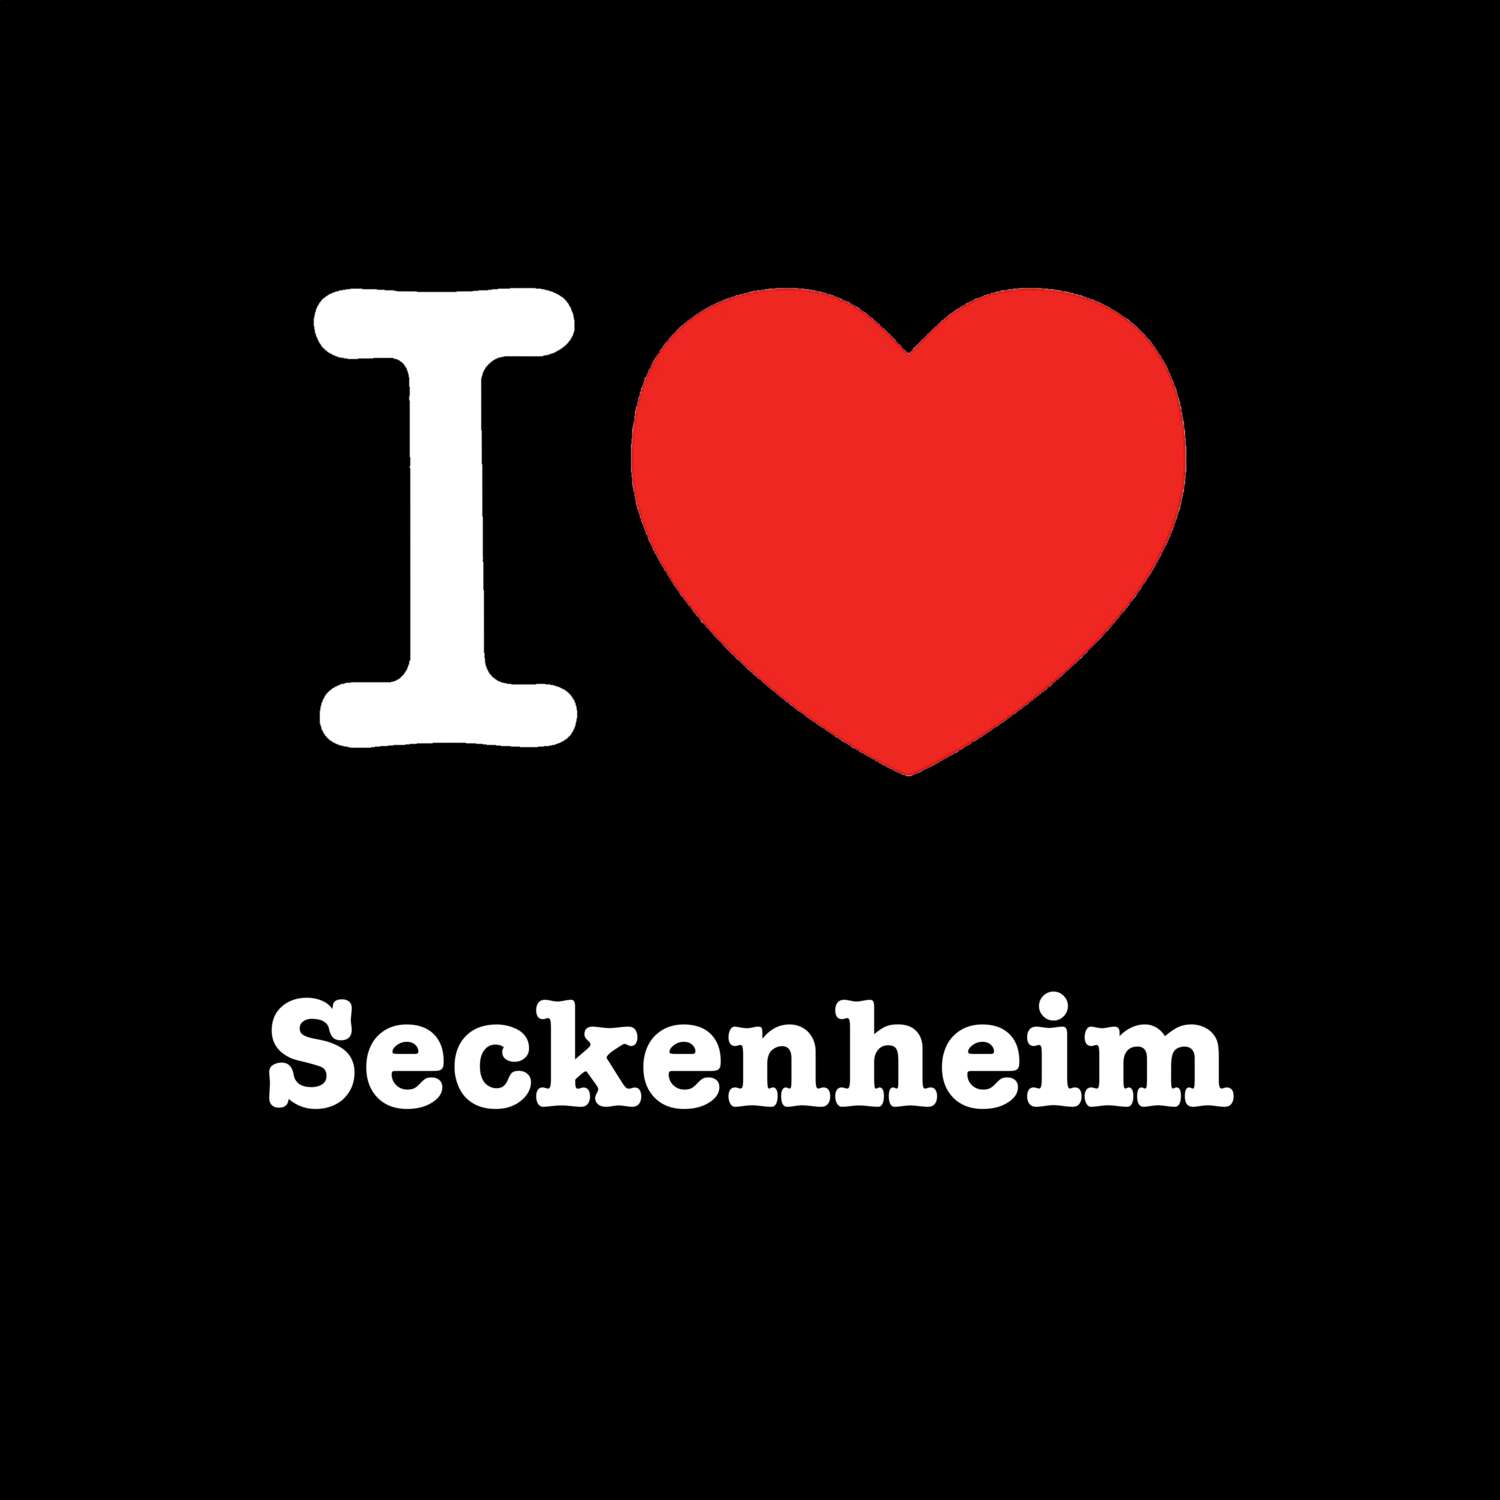 Seckenheim T-Shirt »I love«